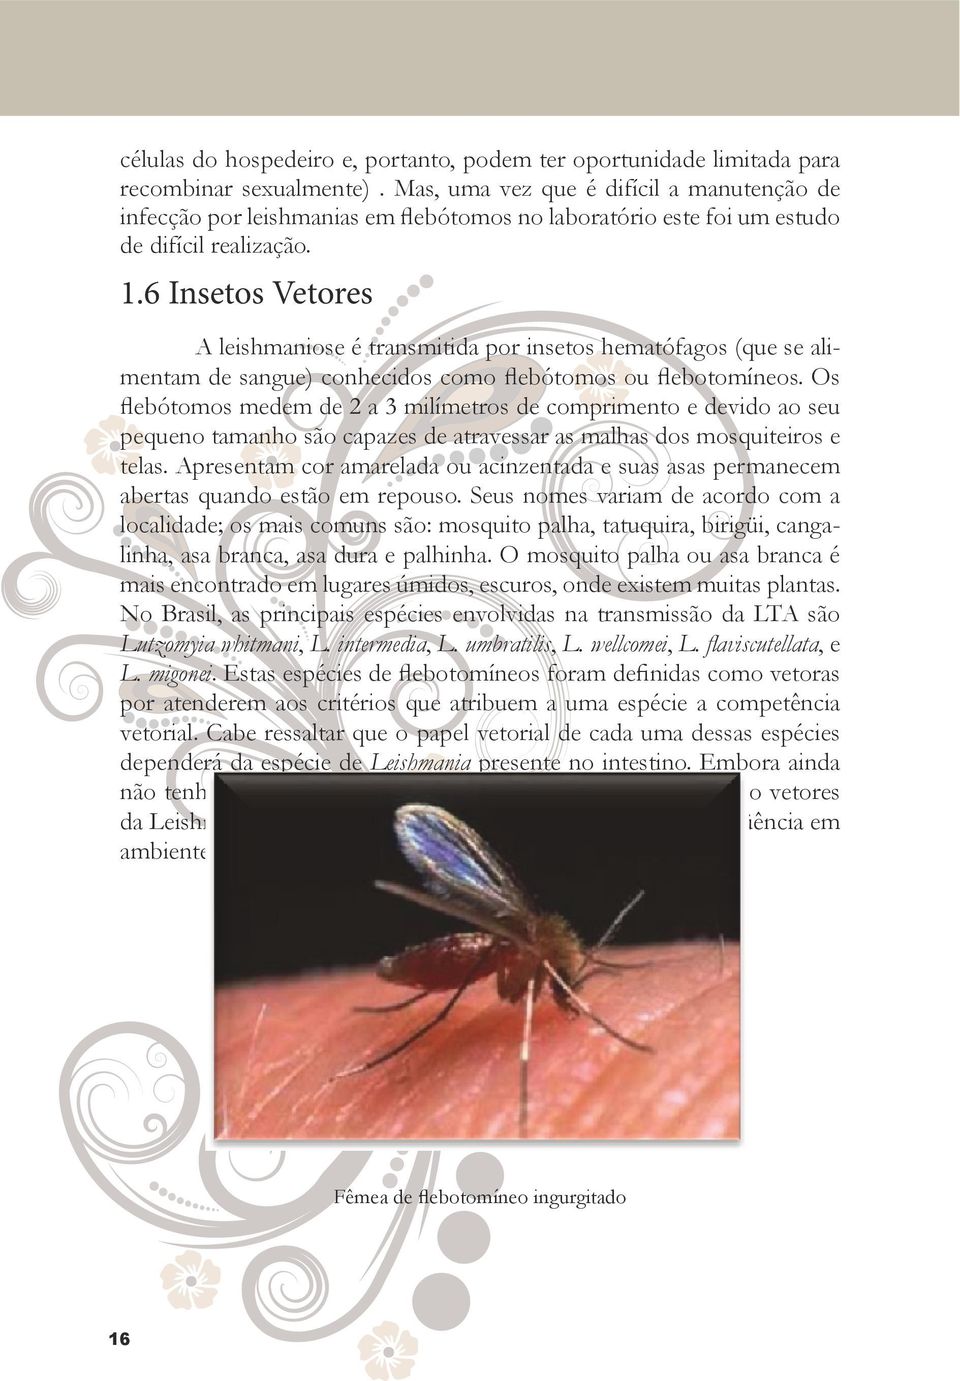 6 Insetos Vetores A leishmaniose é transmitida por insetos hematófagos (que se alimentam de sangue) conhecidos como flebótomos ou flebotomíneos.